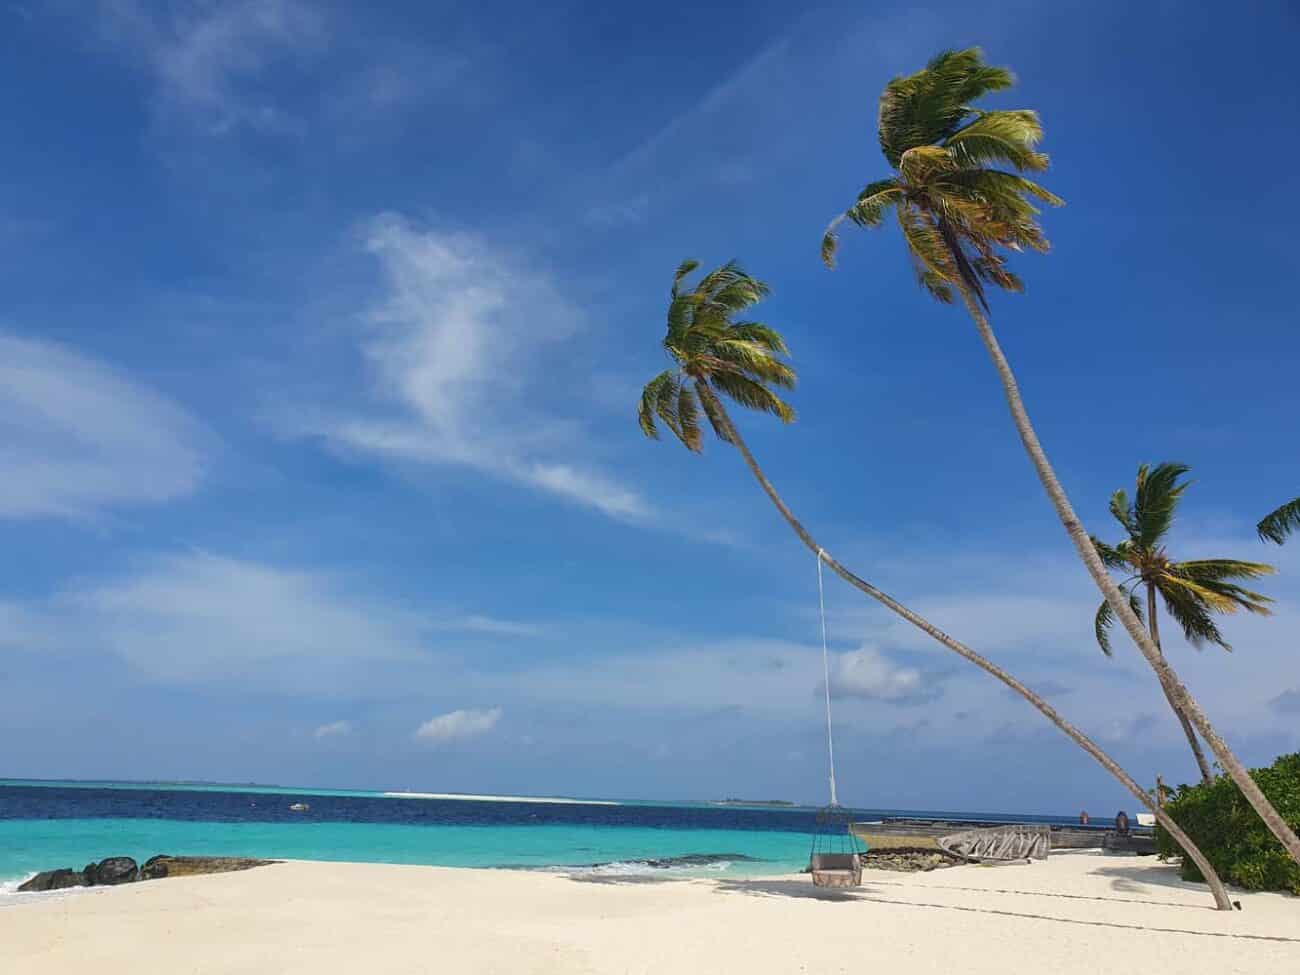 Malediven Urlaub